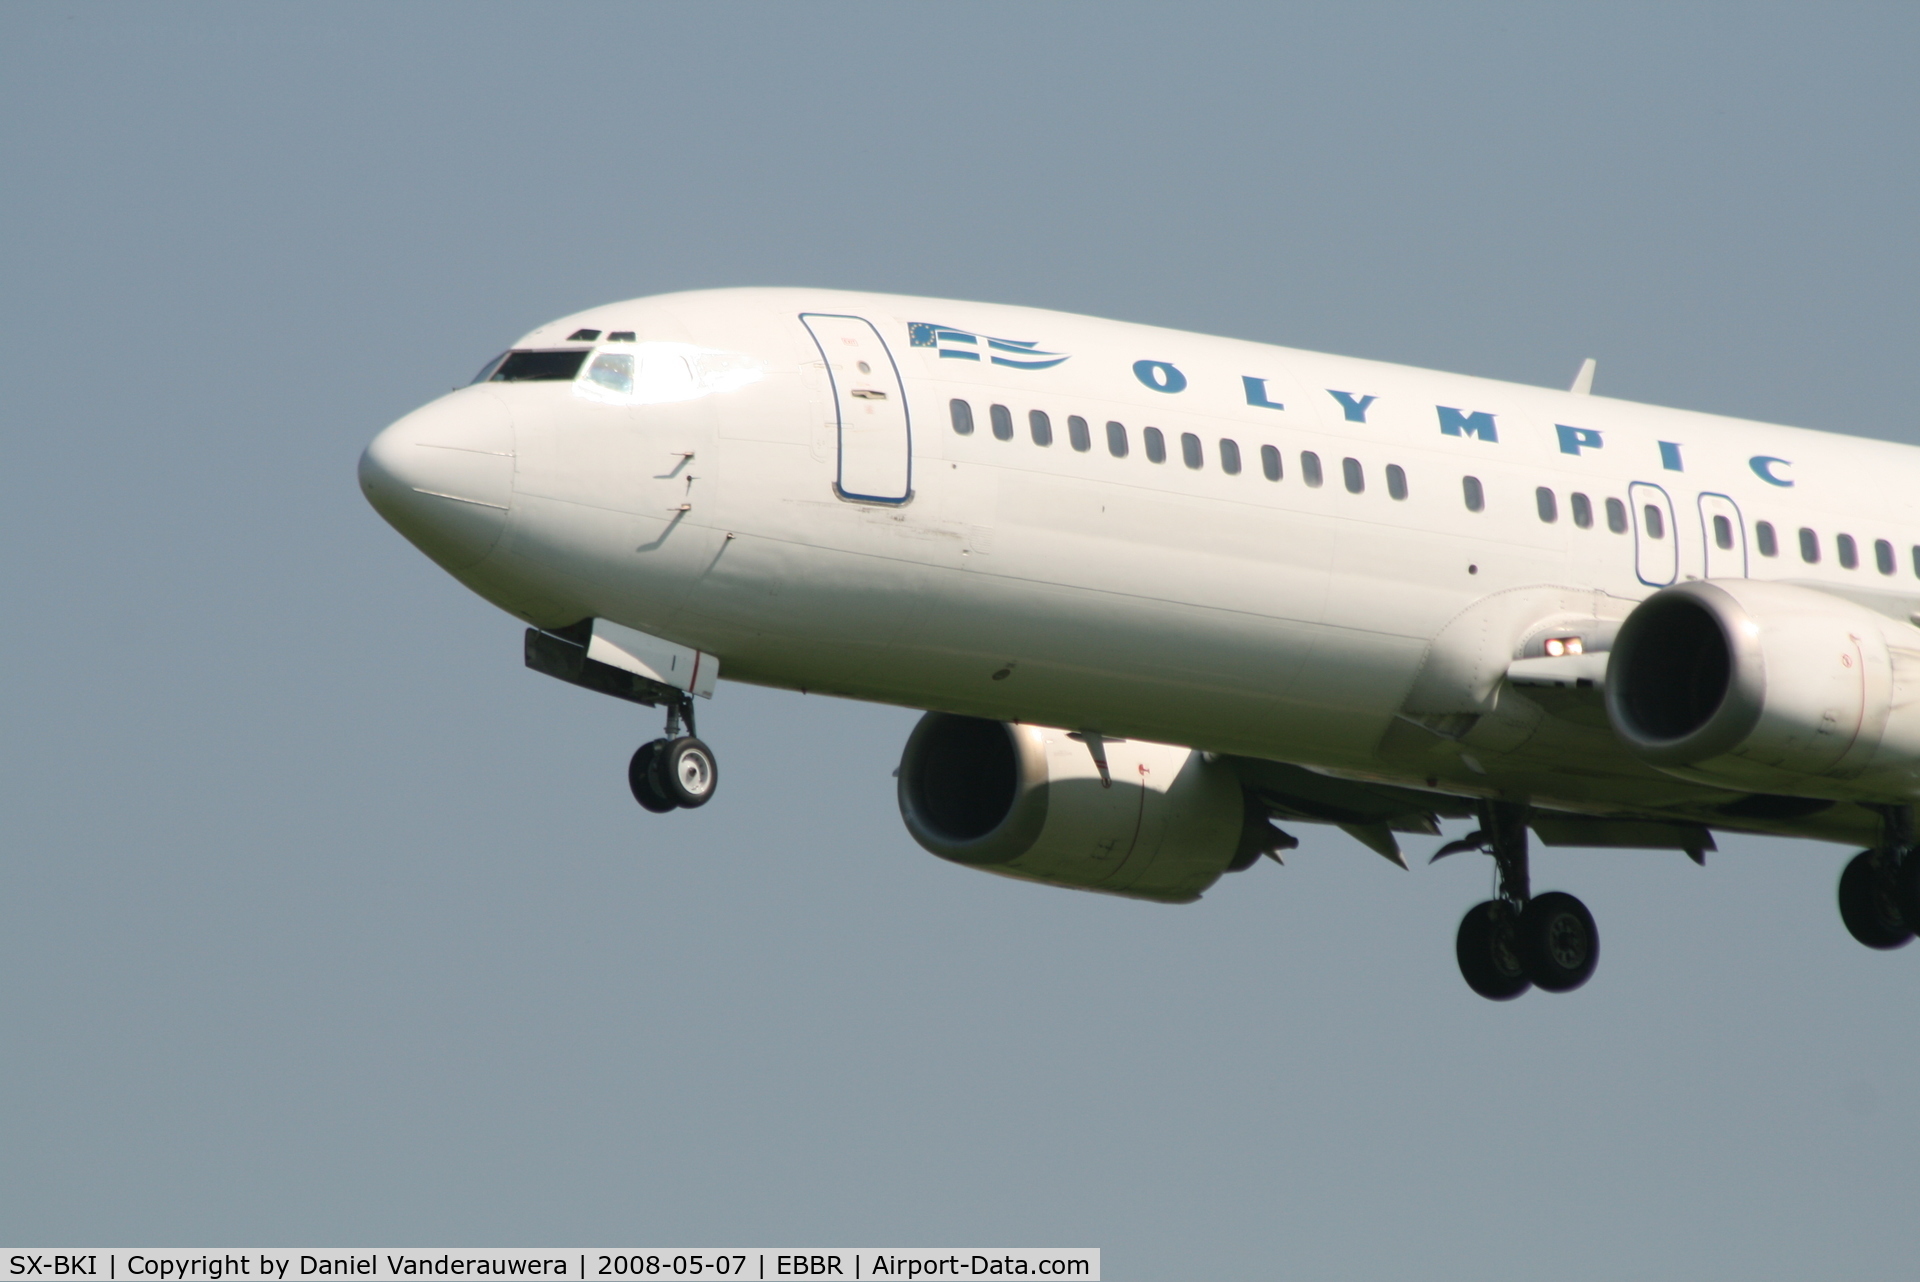 SX-BKI, 1990 Boeing 737-4Q8 C/N 24704/1855, arrival of flight OA145 to rwy 25L